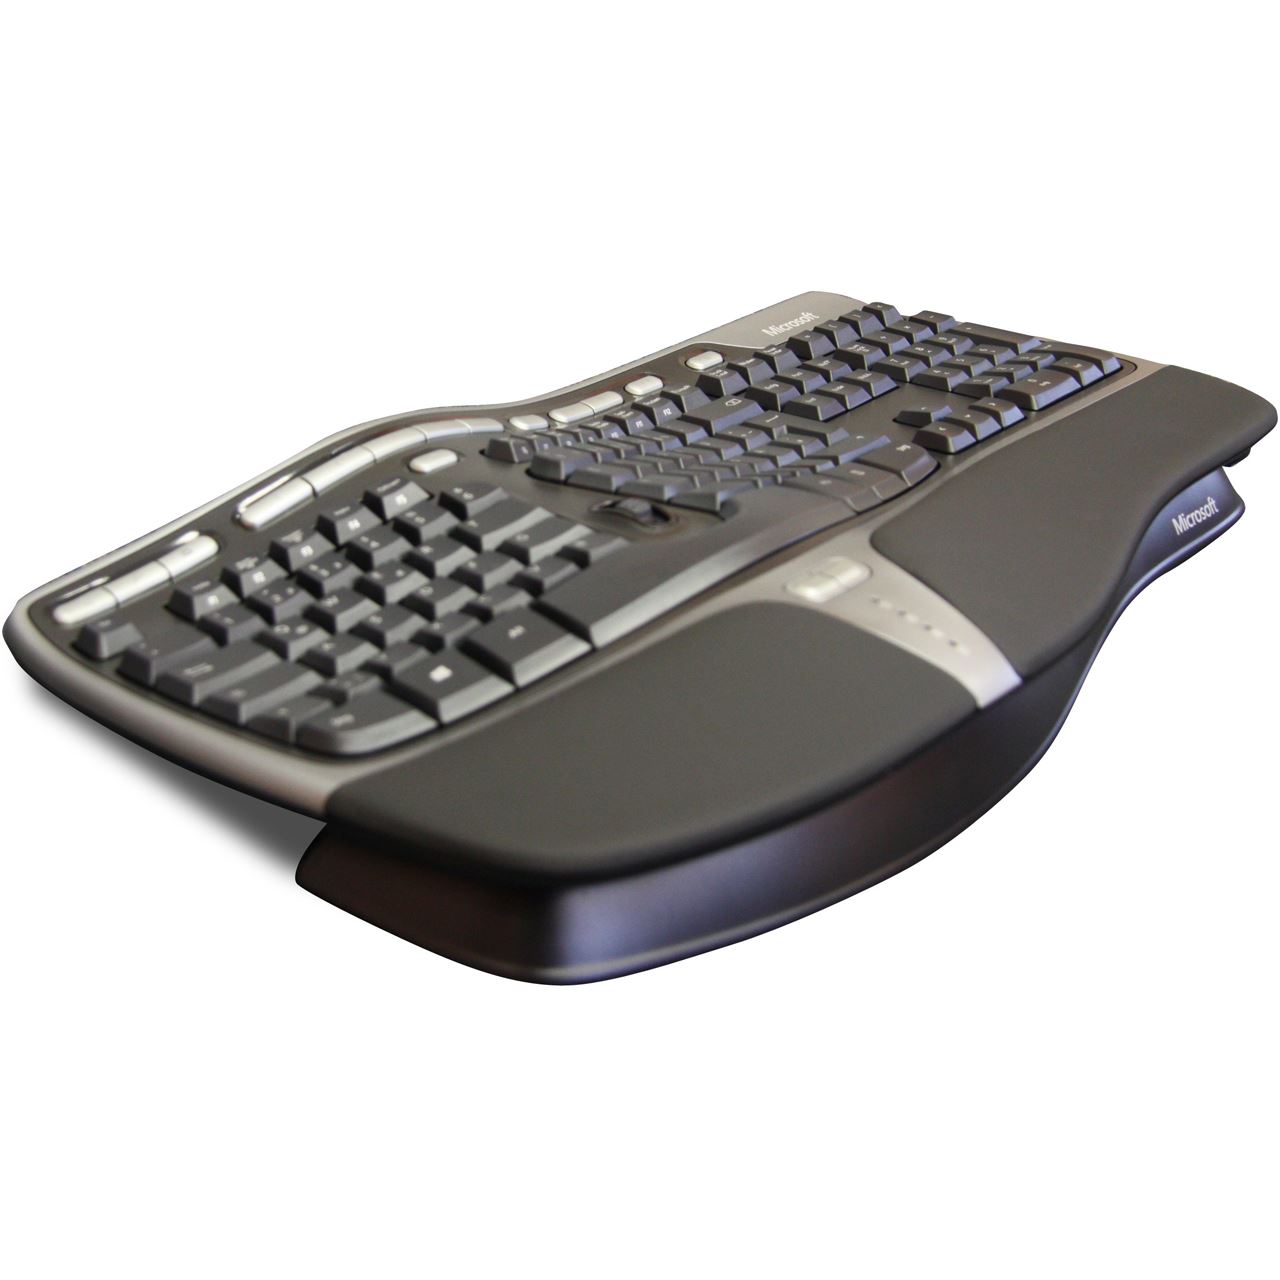 drivers for microsoft ergonomic keyboard 4000